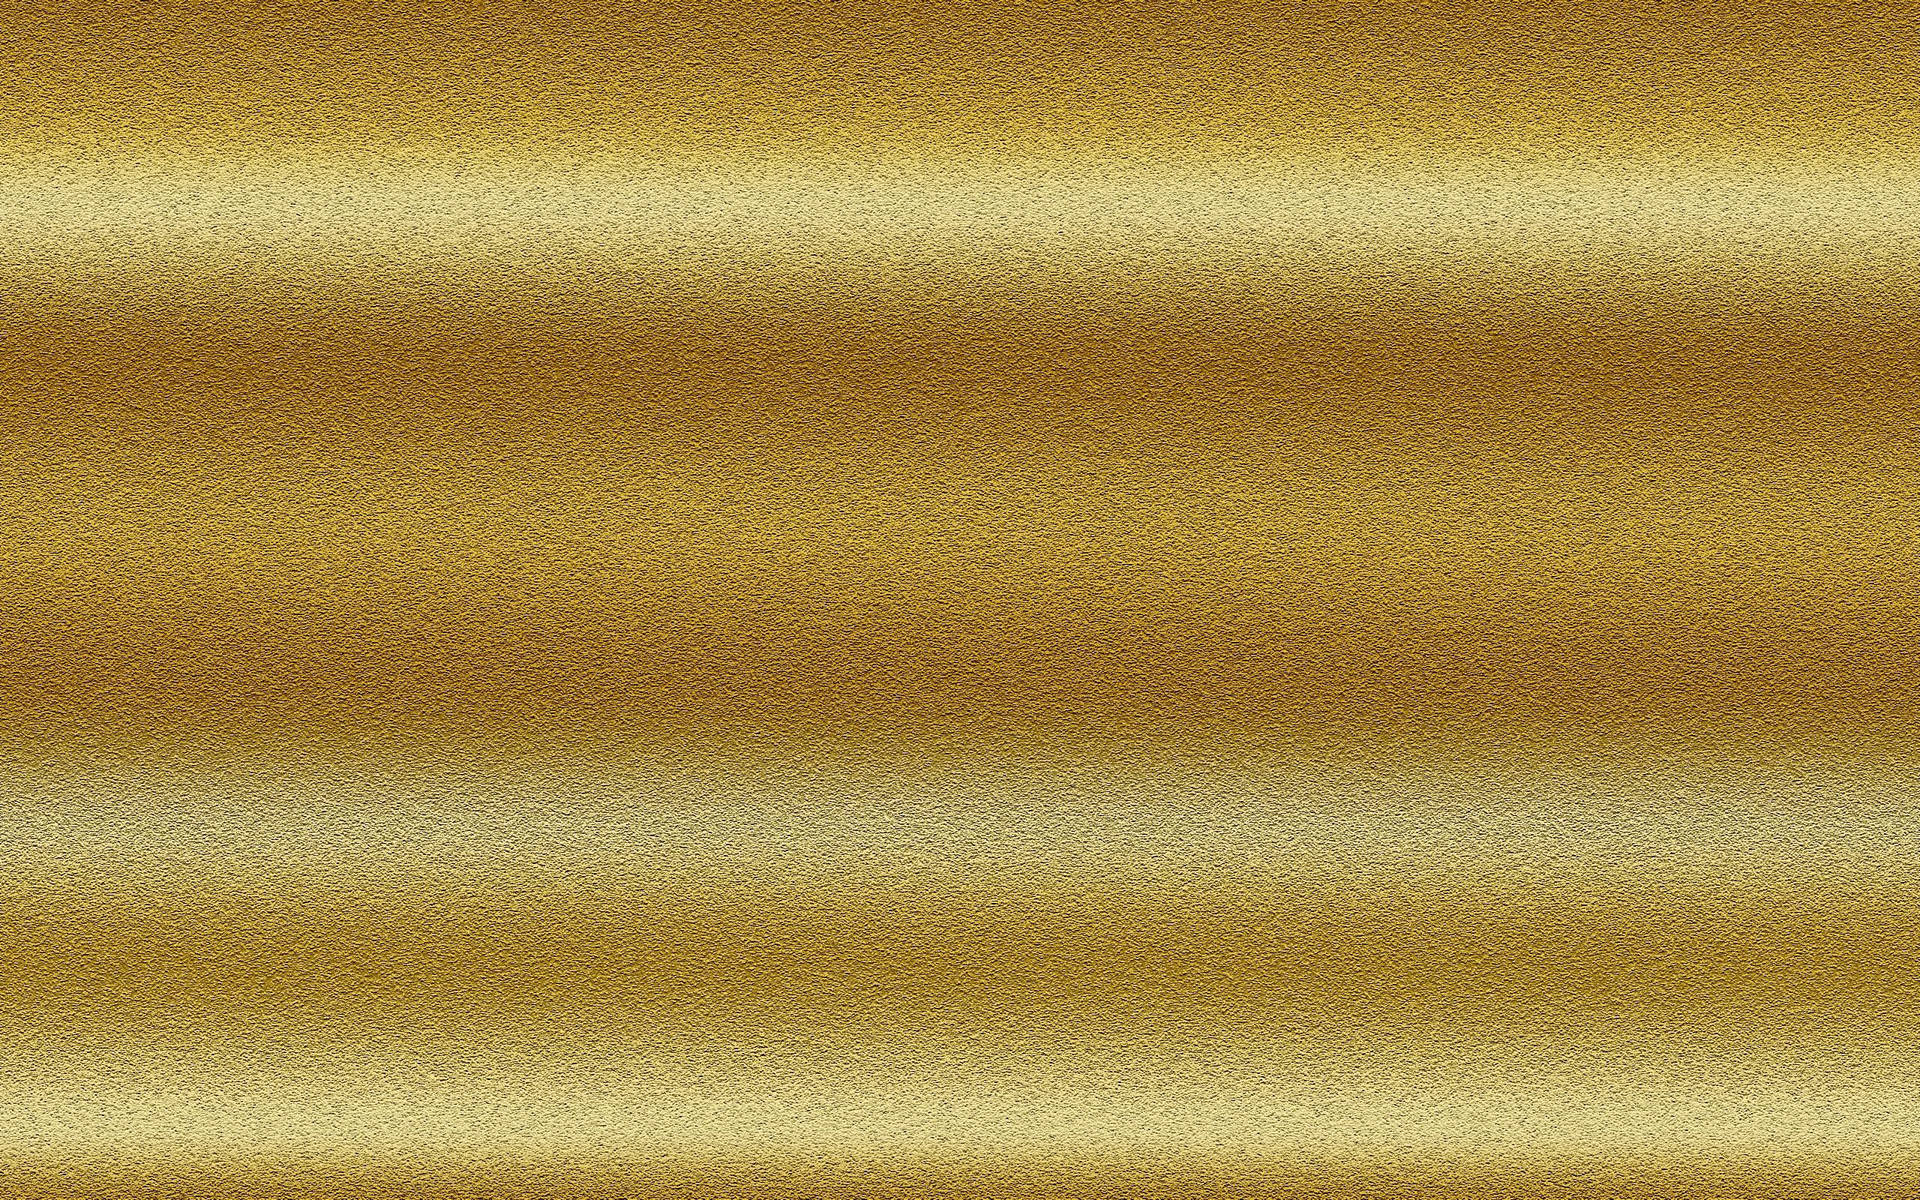 Gold Sheet Background